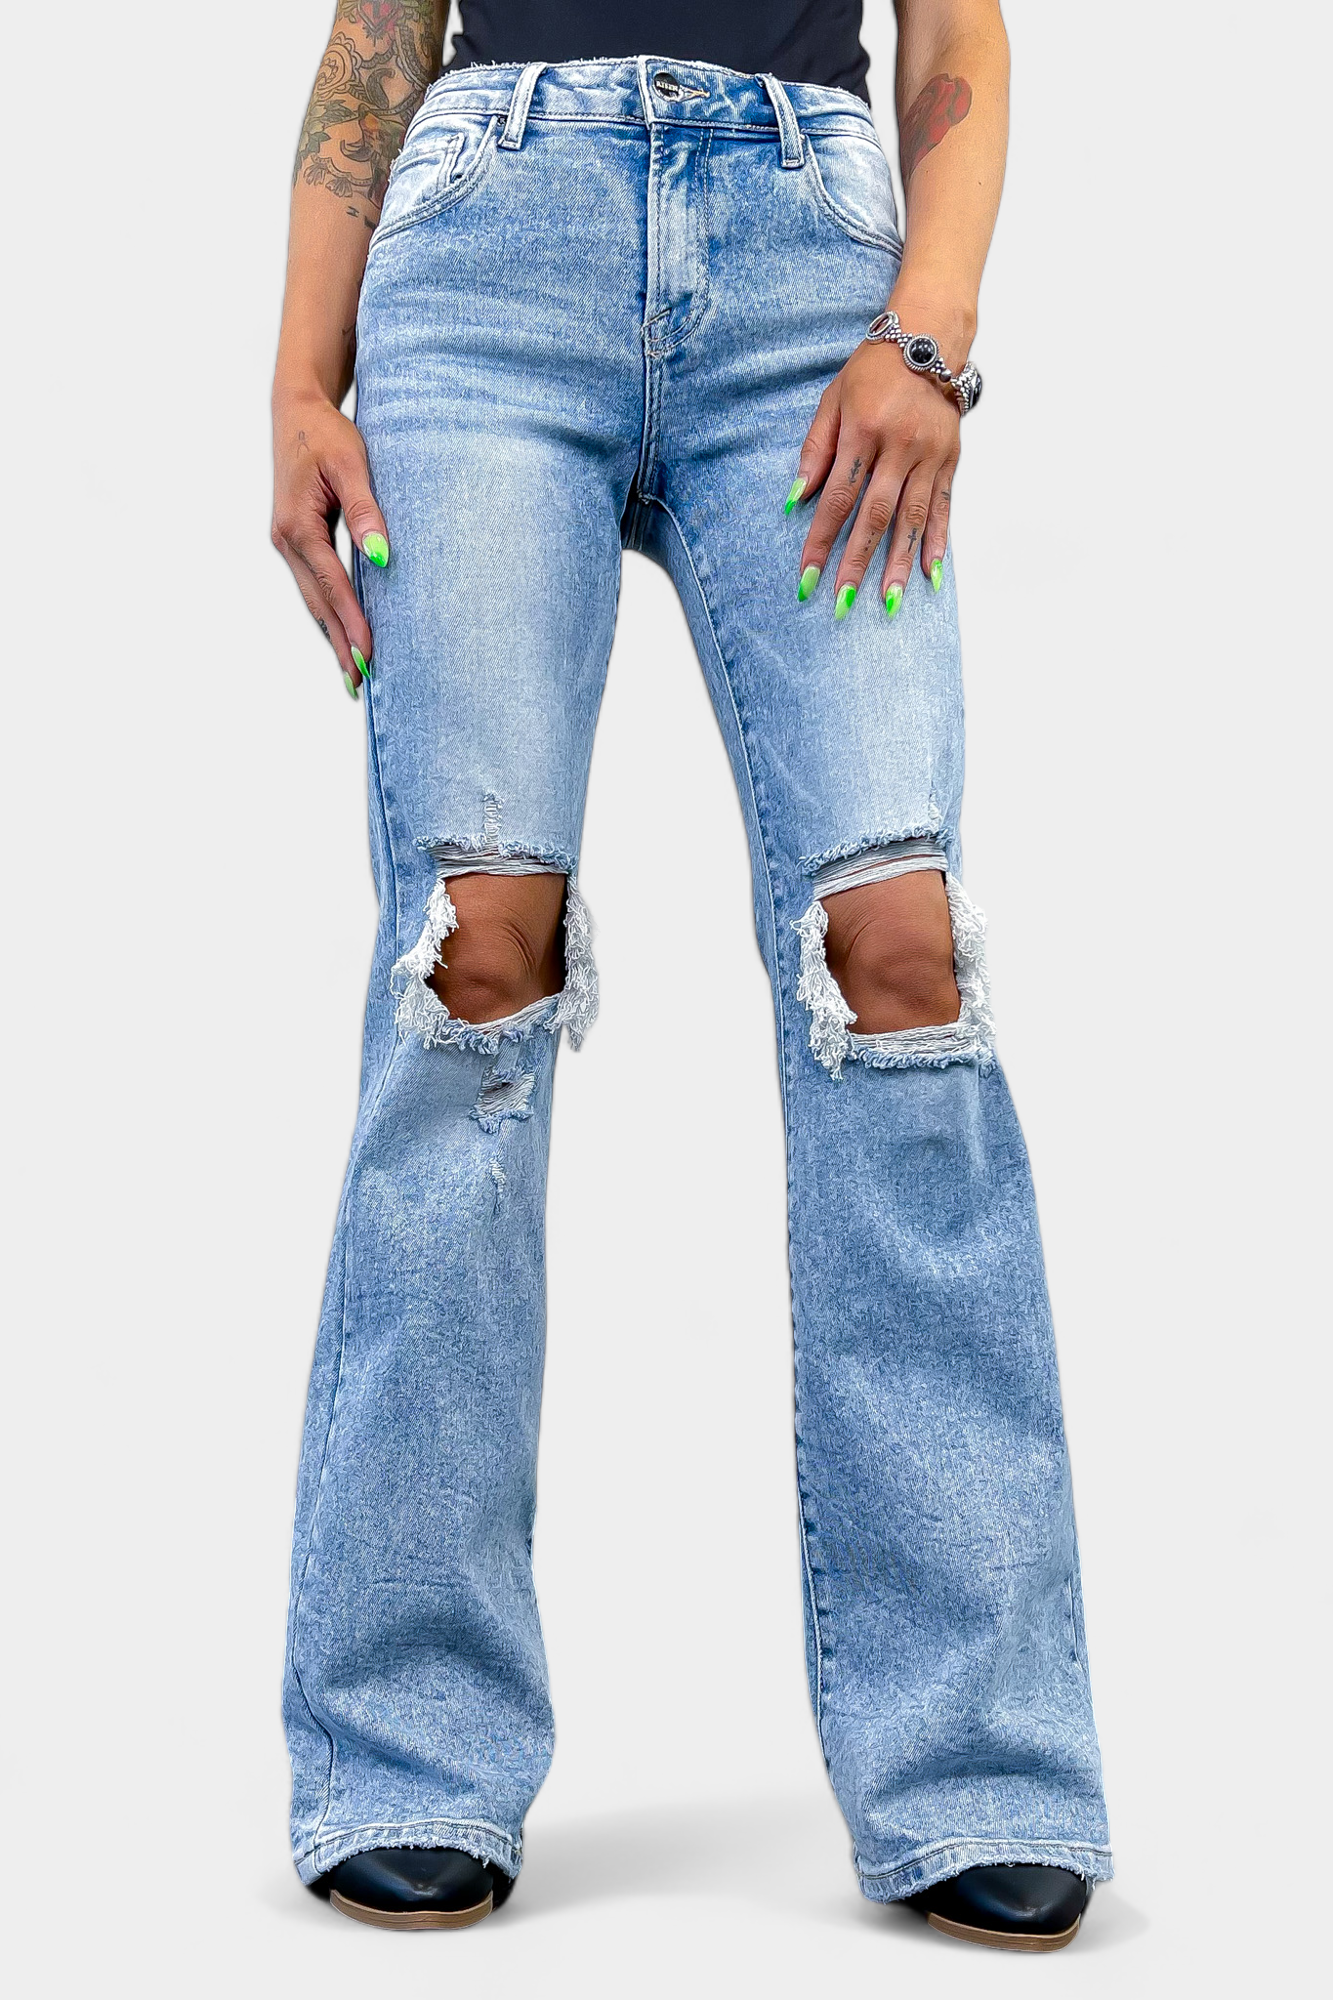 Risen RDP5376 Jeans